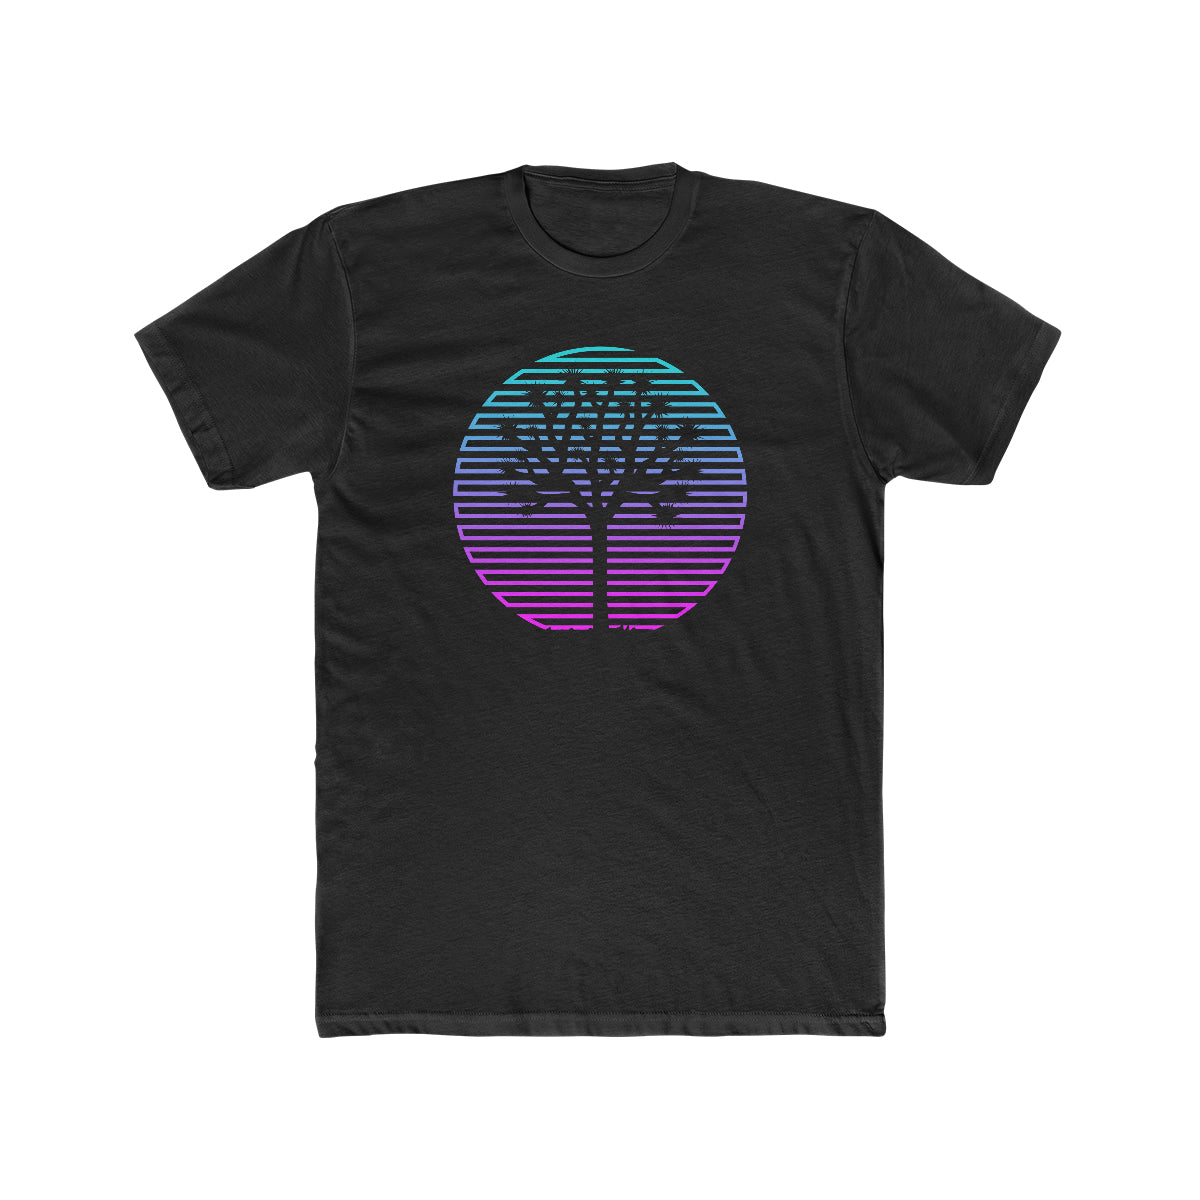 Joshua Tree National Park T-Shirt - Limited Edition Neon